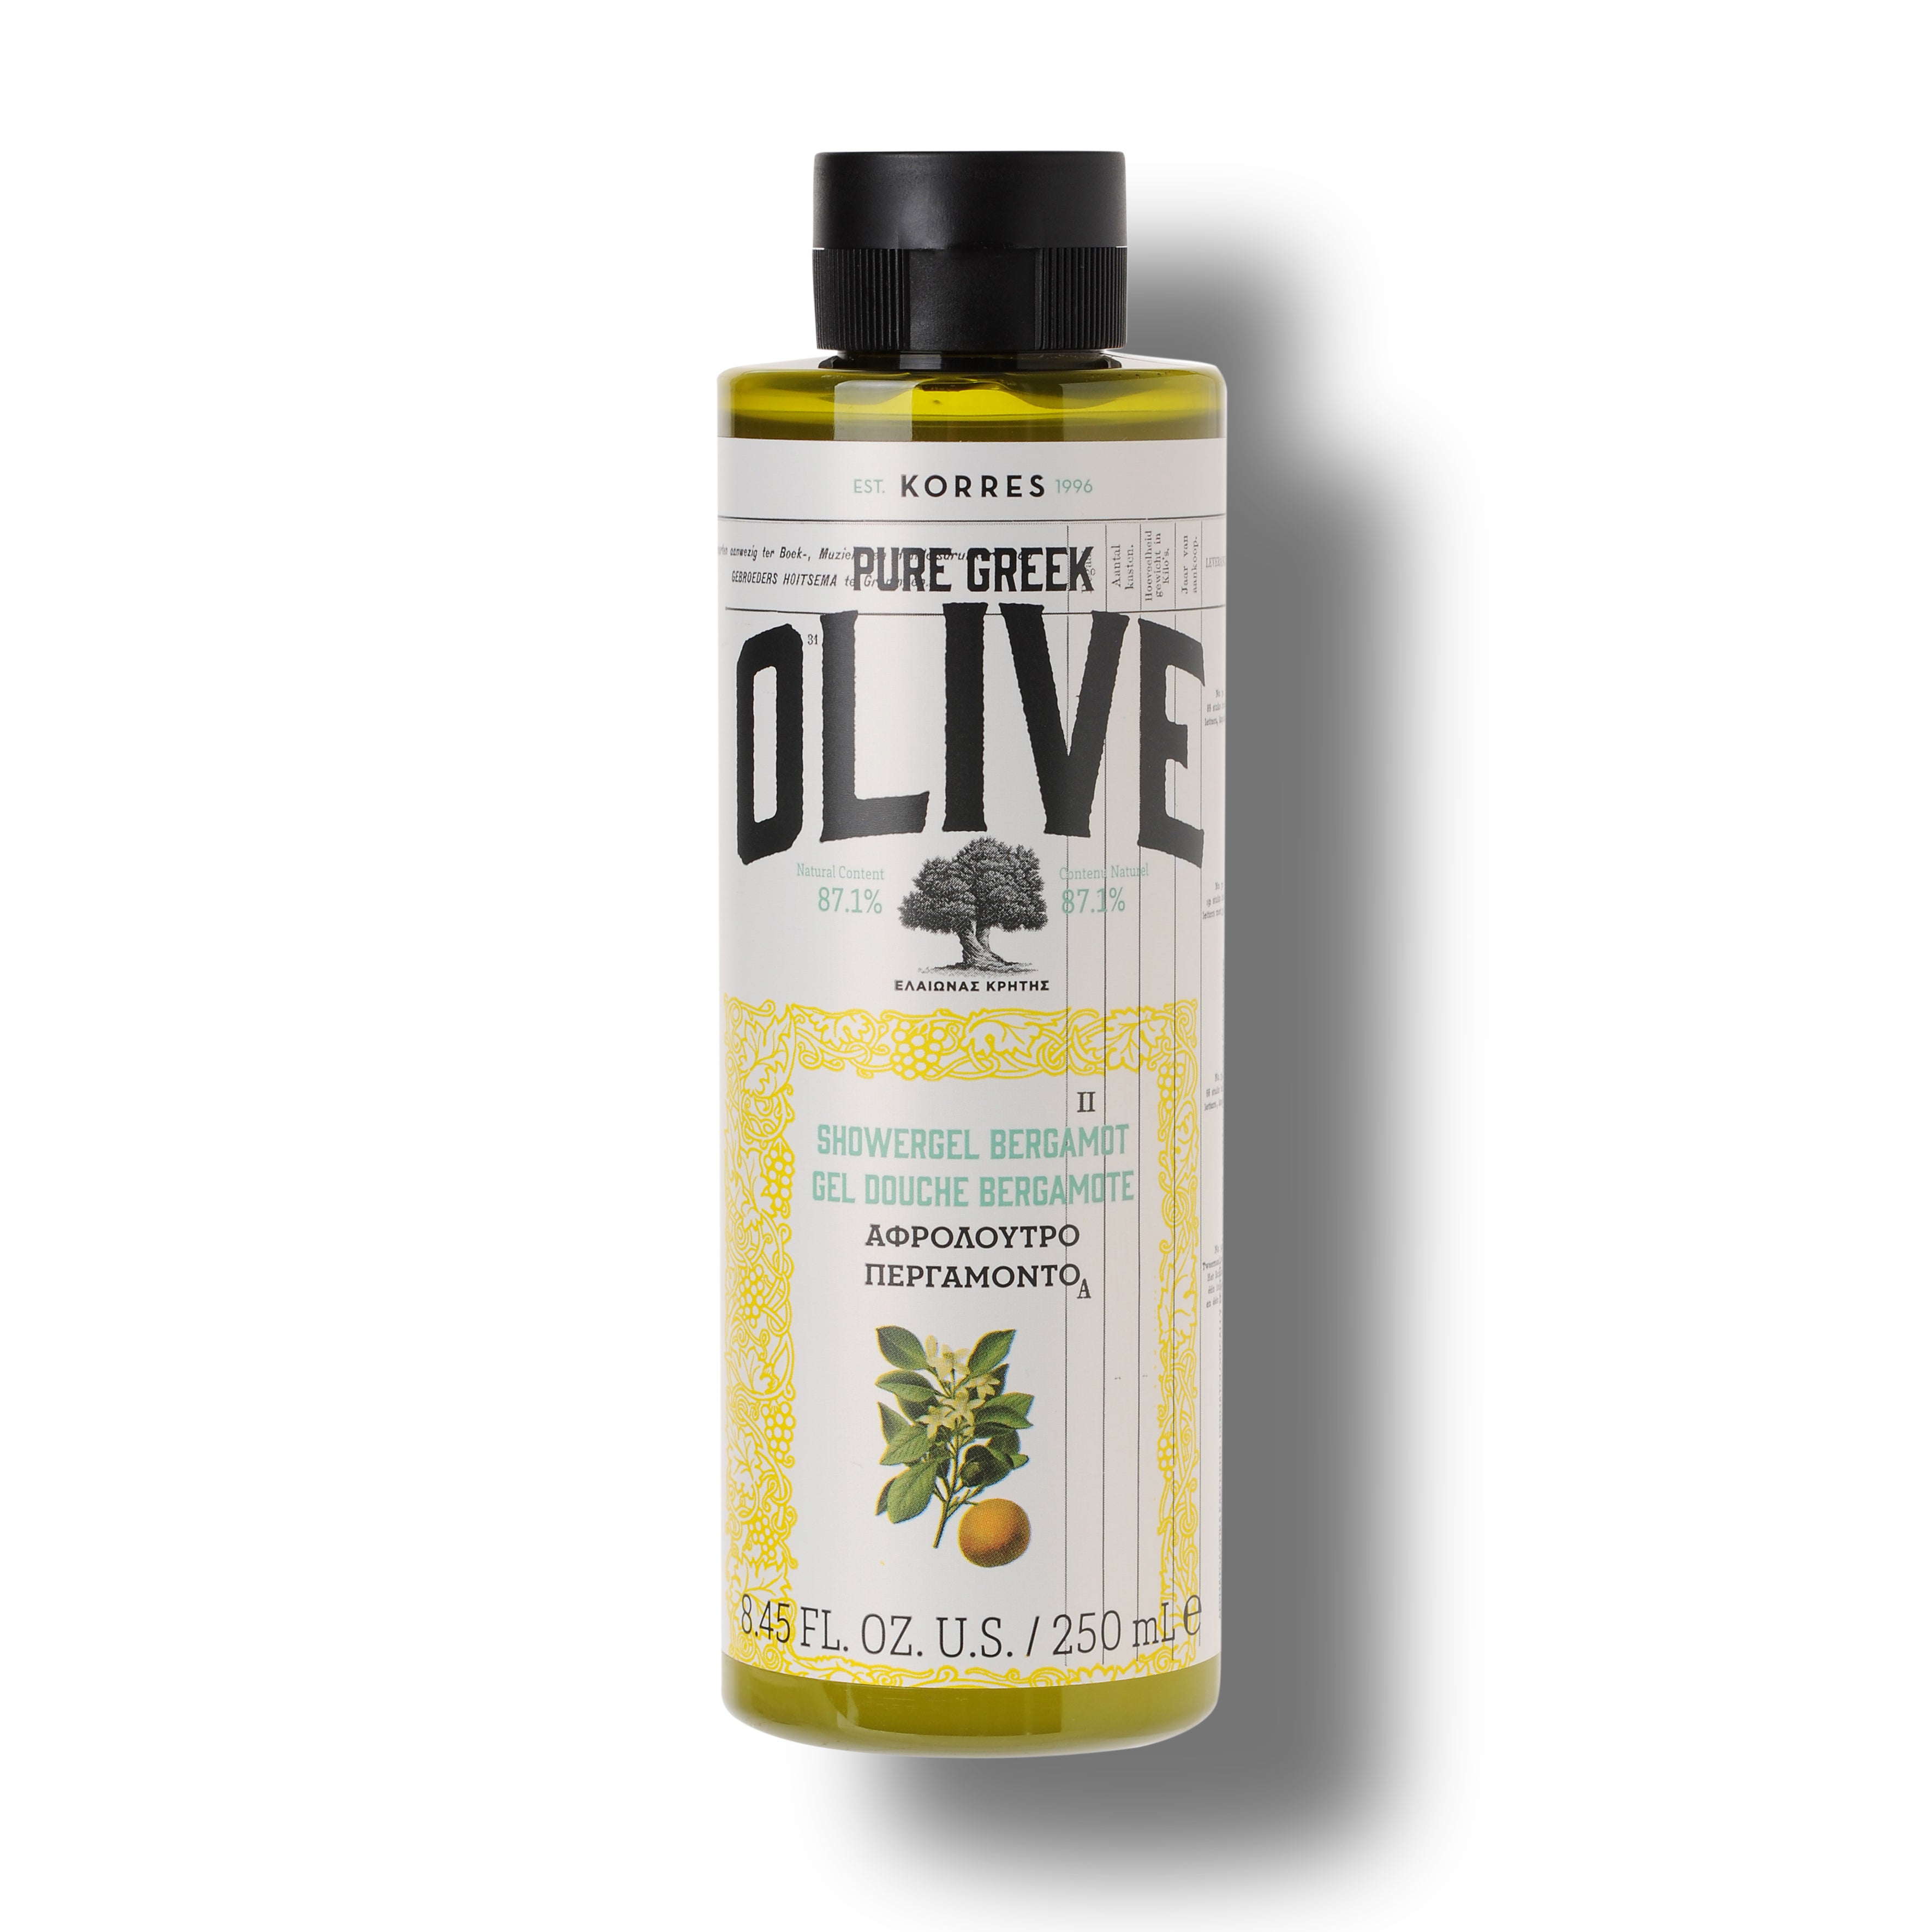 Pure Greek Olive Shower Gel - Bergamot